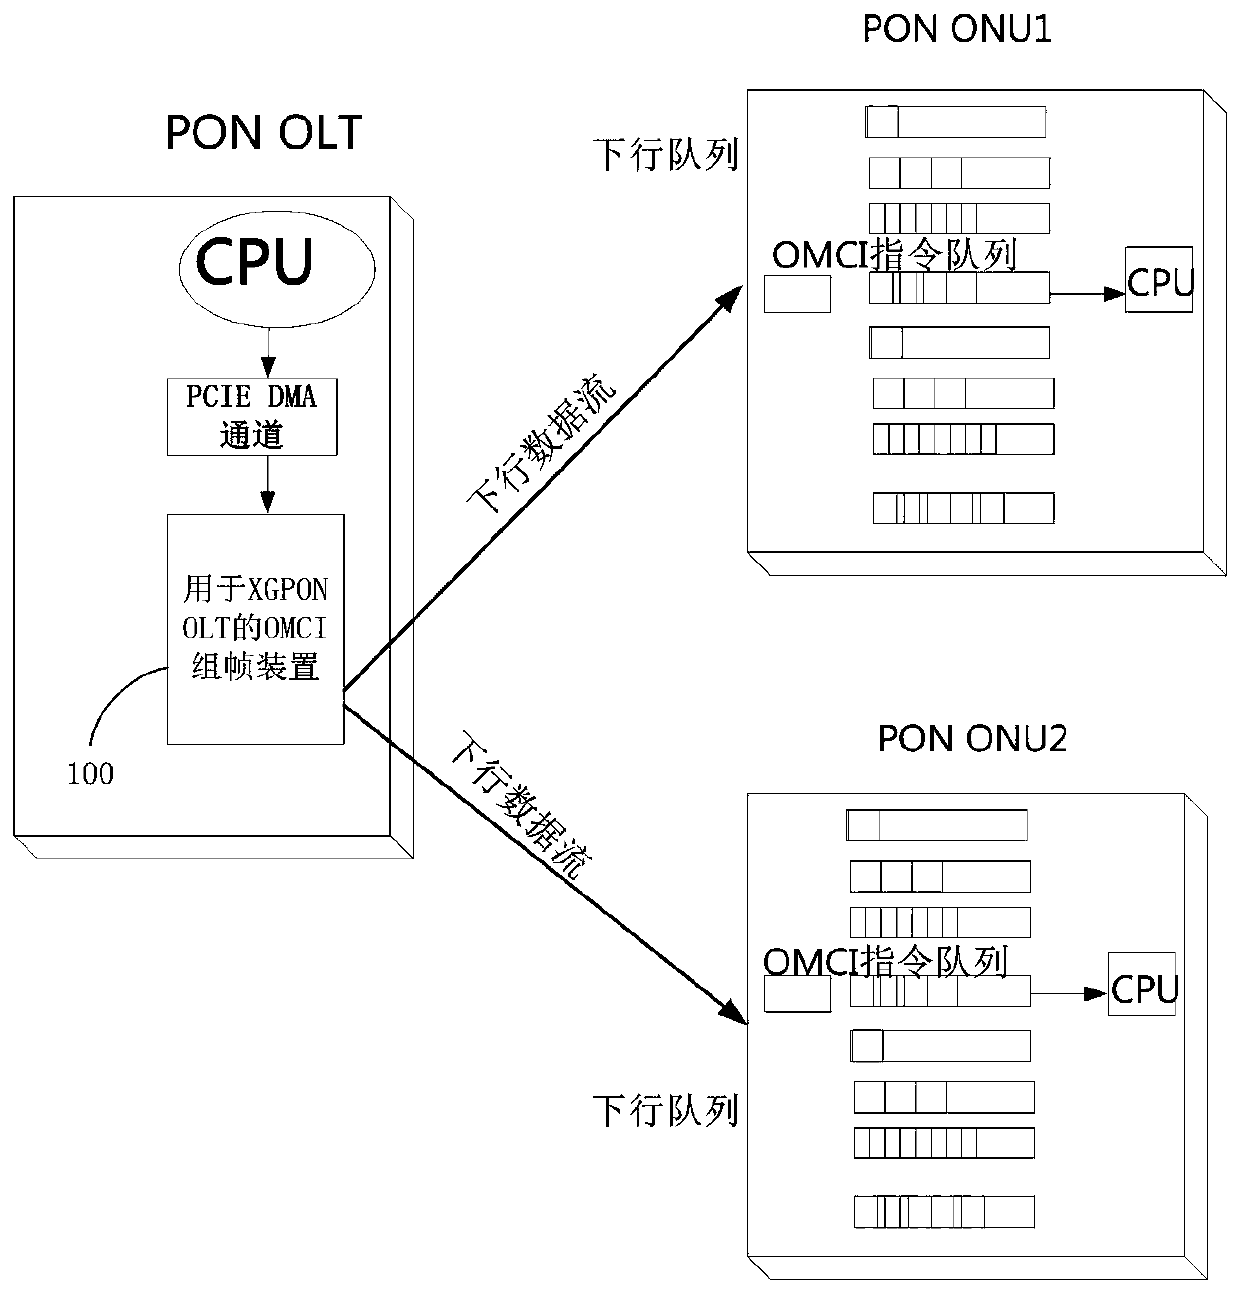 OMCI framing device and framing method for XGPON OLT